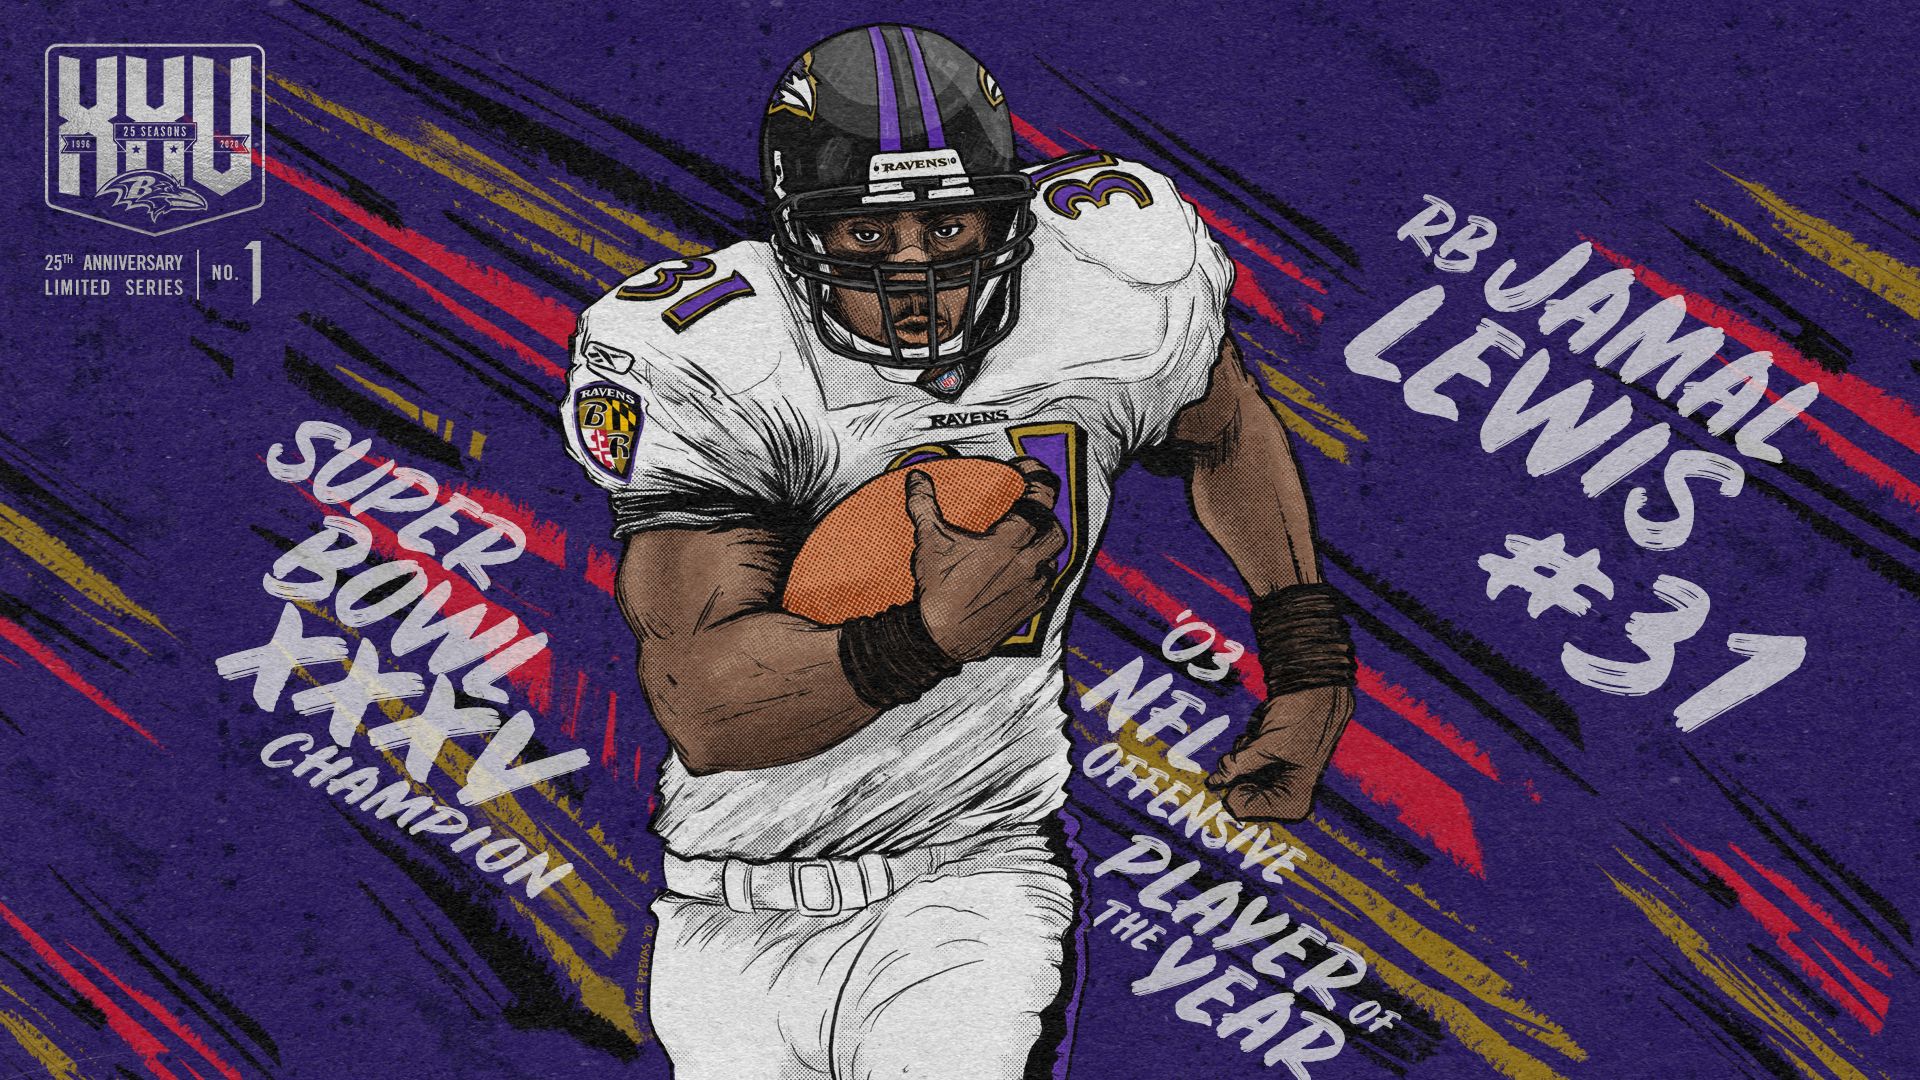 Ravens Wallpaper. Baltimore Ravens .baltimoreravens.com